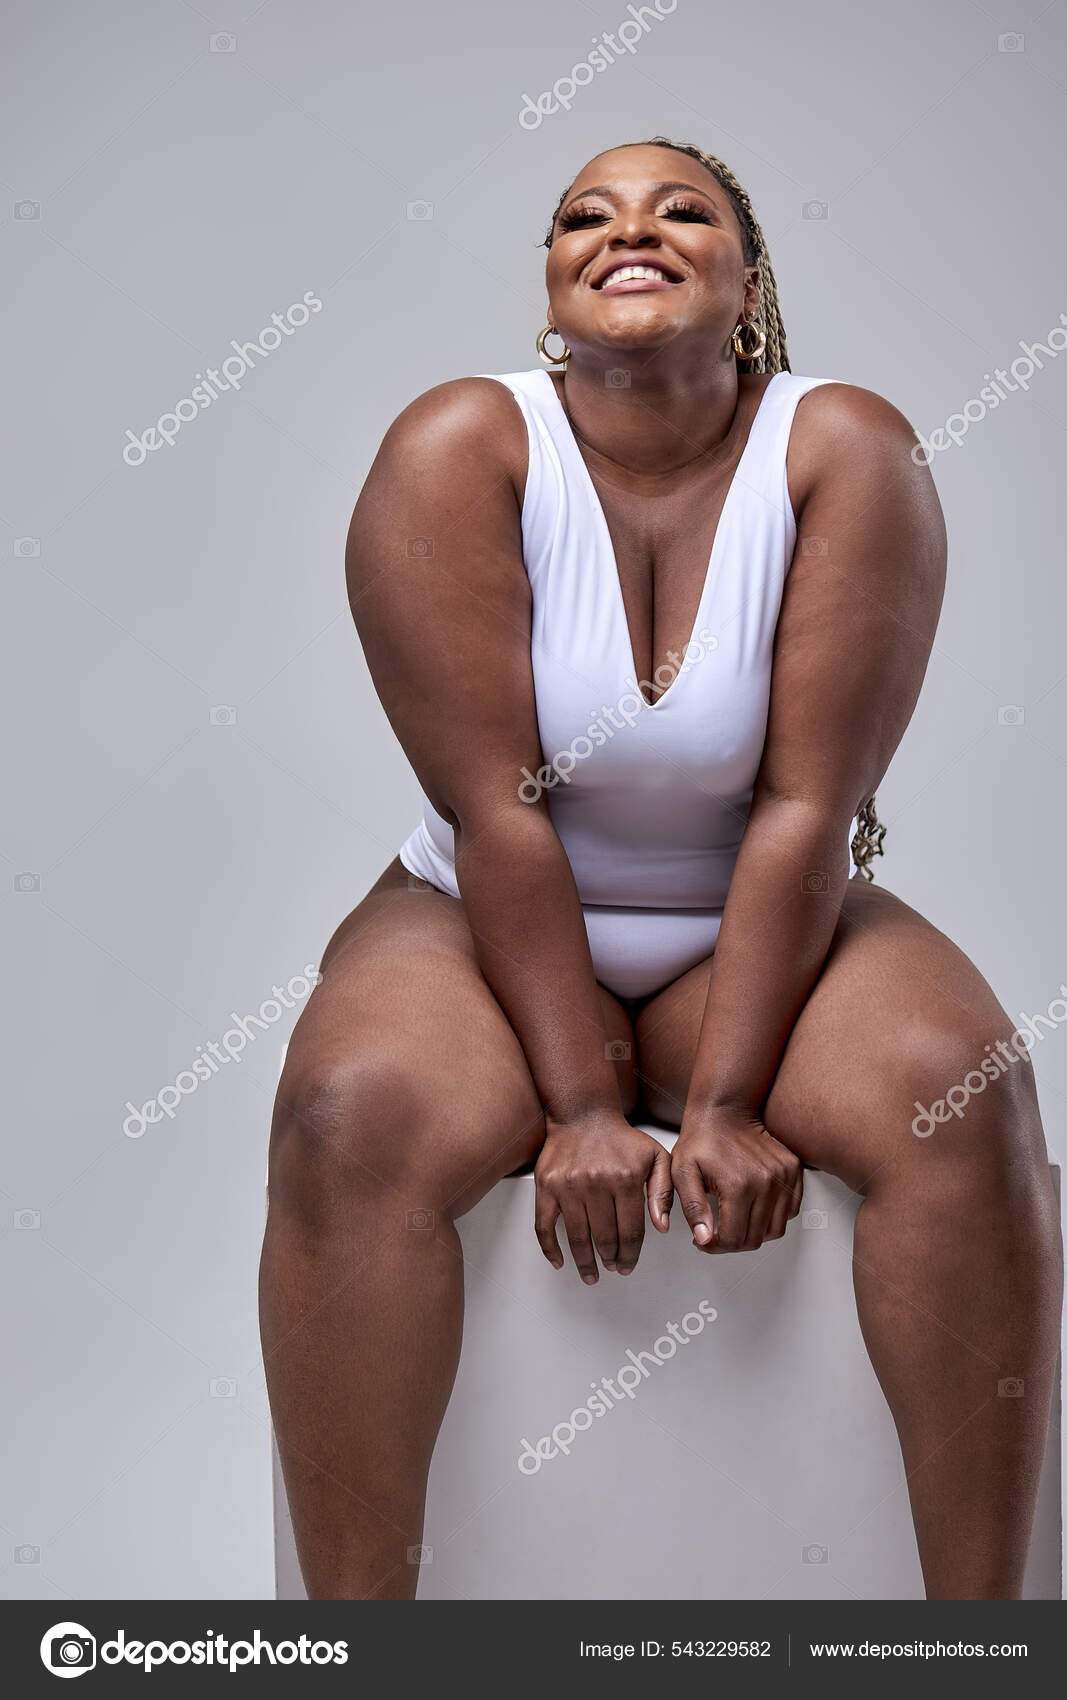 https://st.depositphotos.com/32281612/54322/i/1600/depositphotos_543229582-stock-photo-cheerful-fat-black-woman-in.jpg